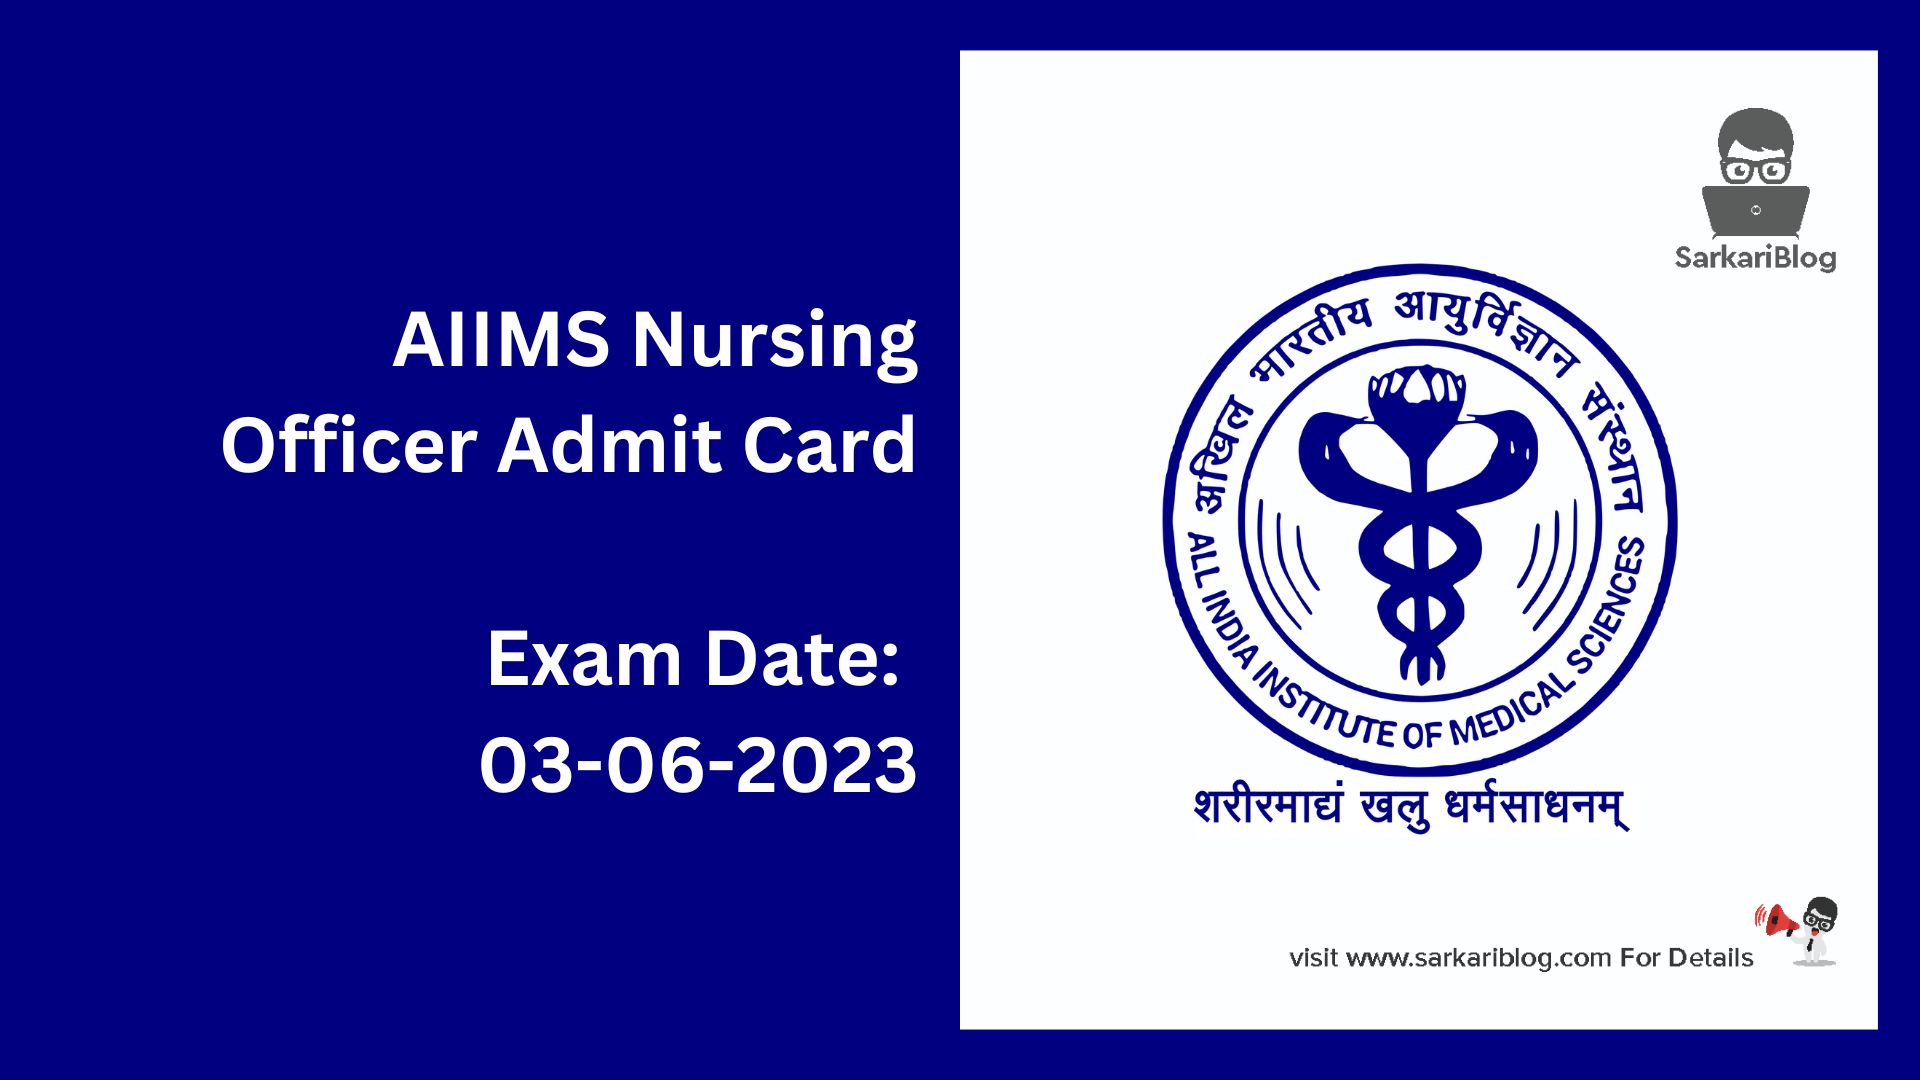 AIIMS Nursing Officer Admit Card 2023